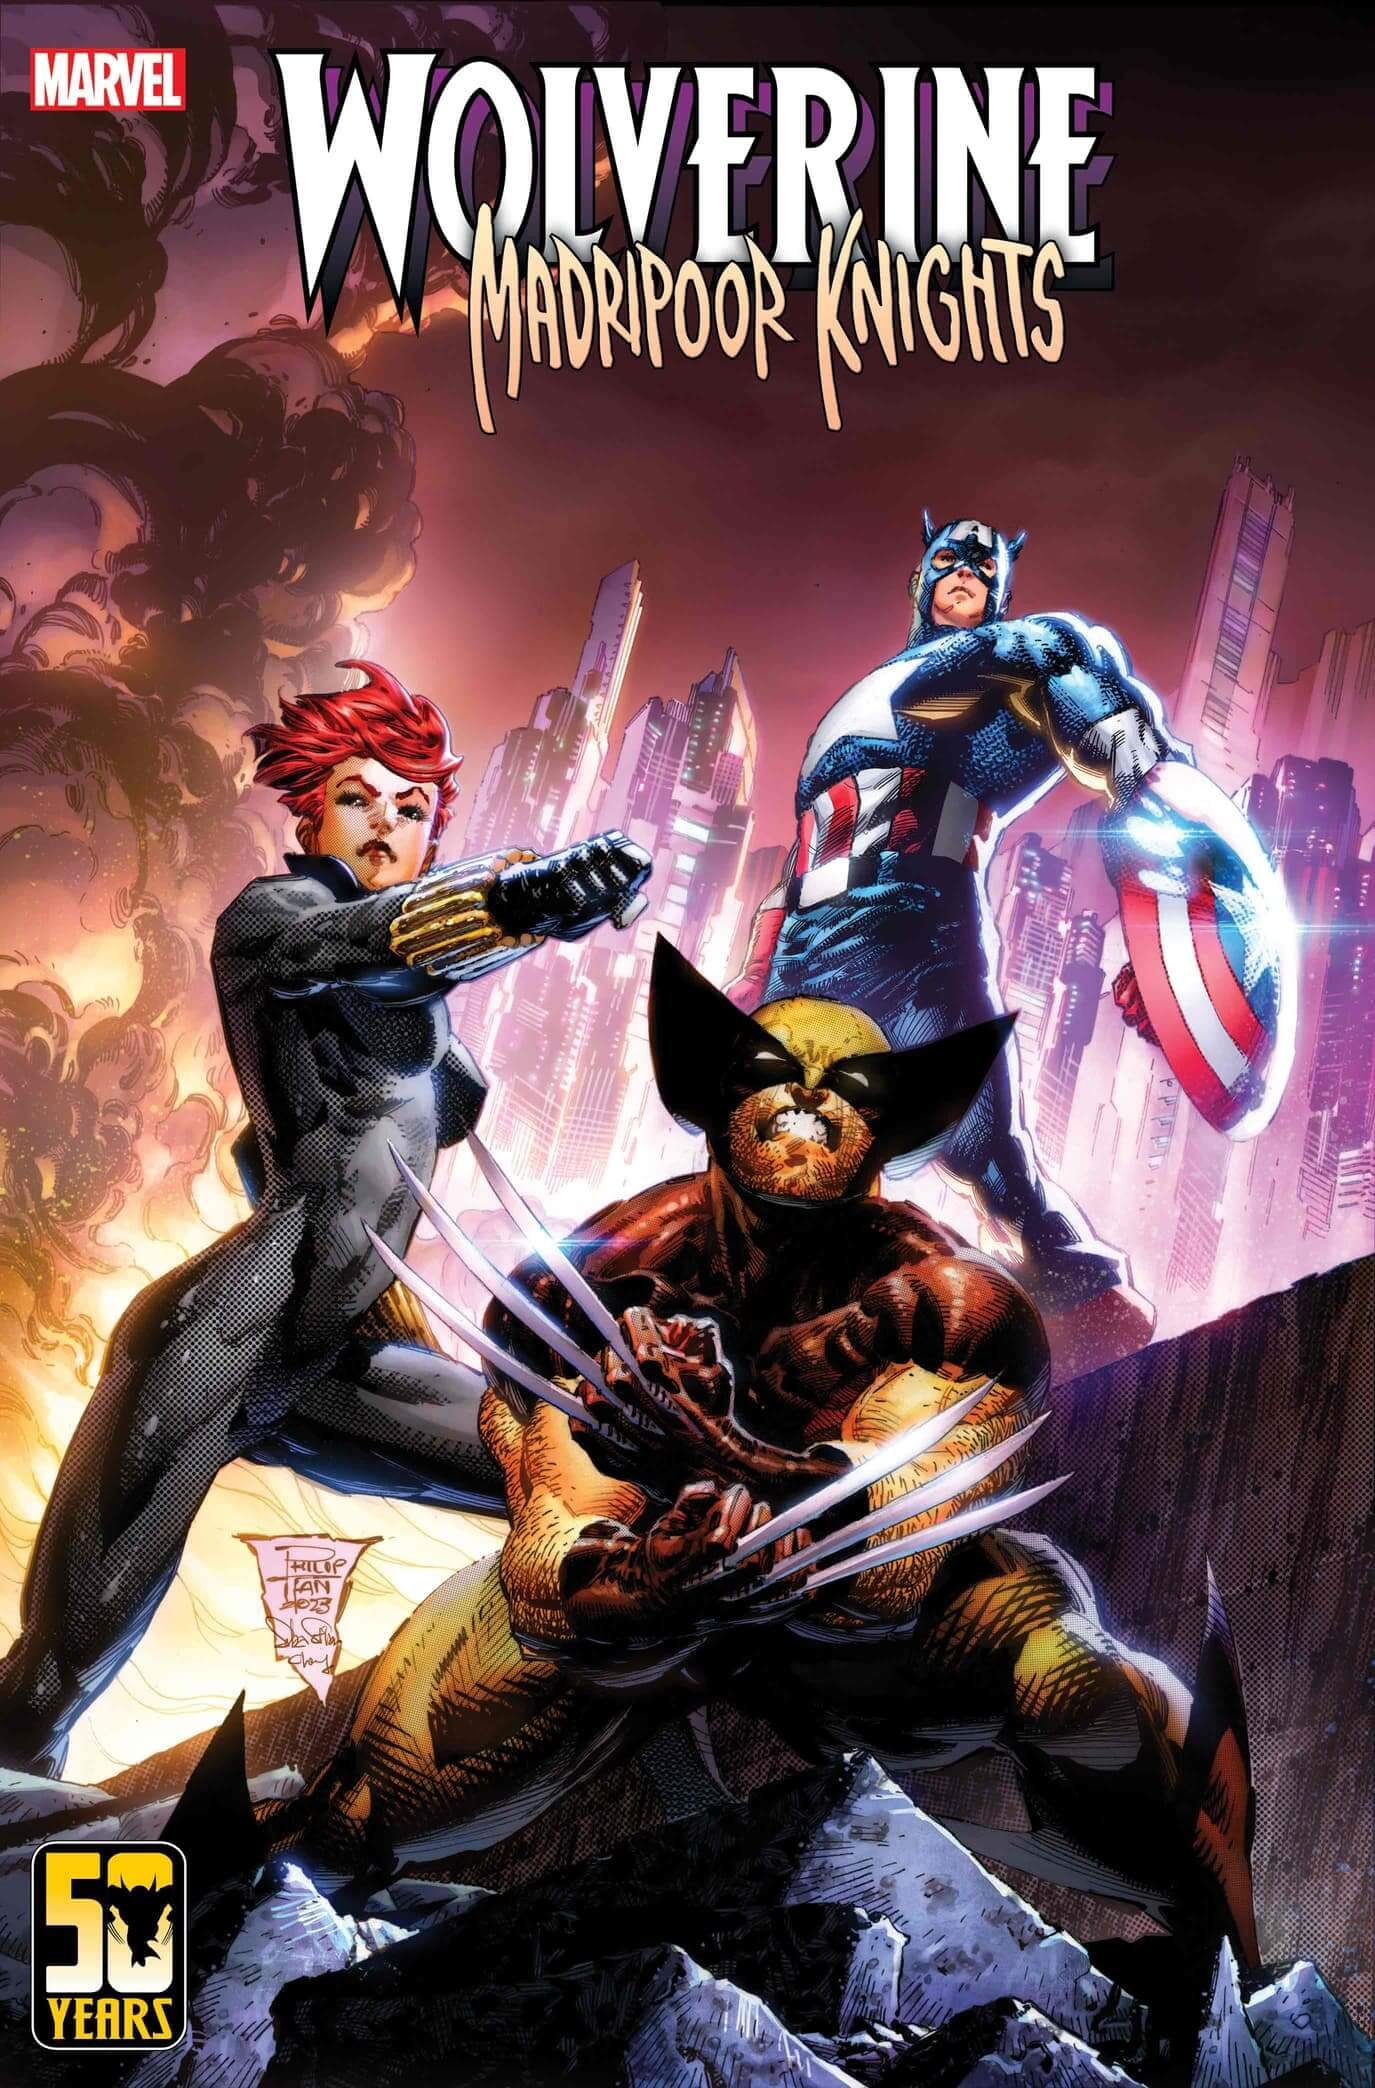 Couverture de Wolverine : Madripoor Knights 1 par Philip Tan